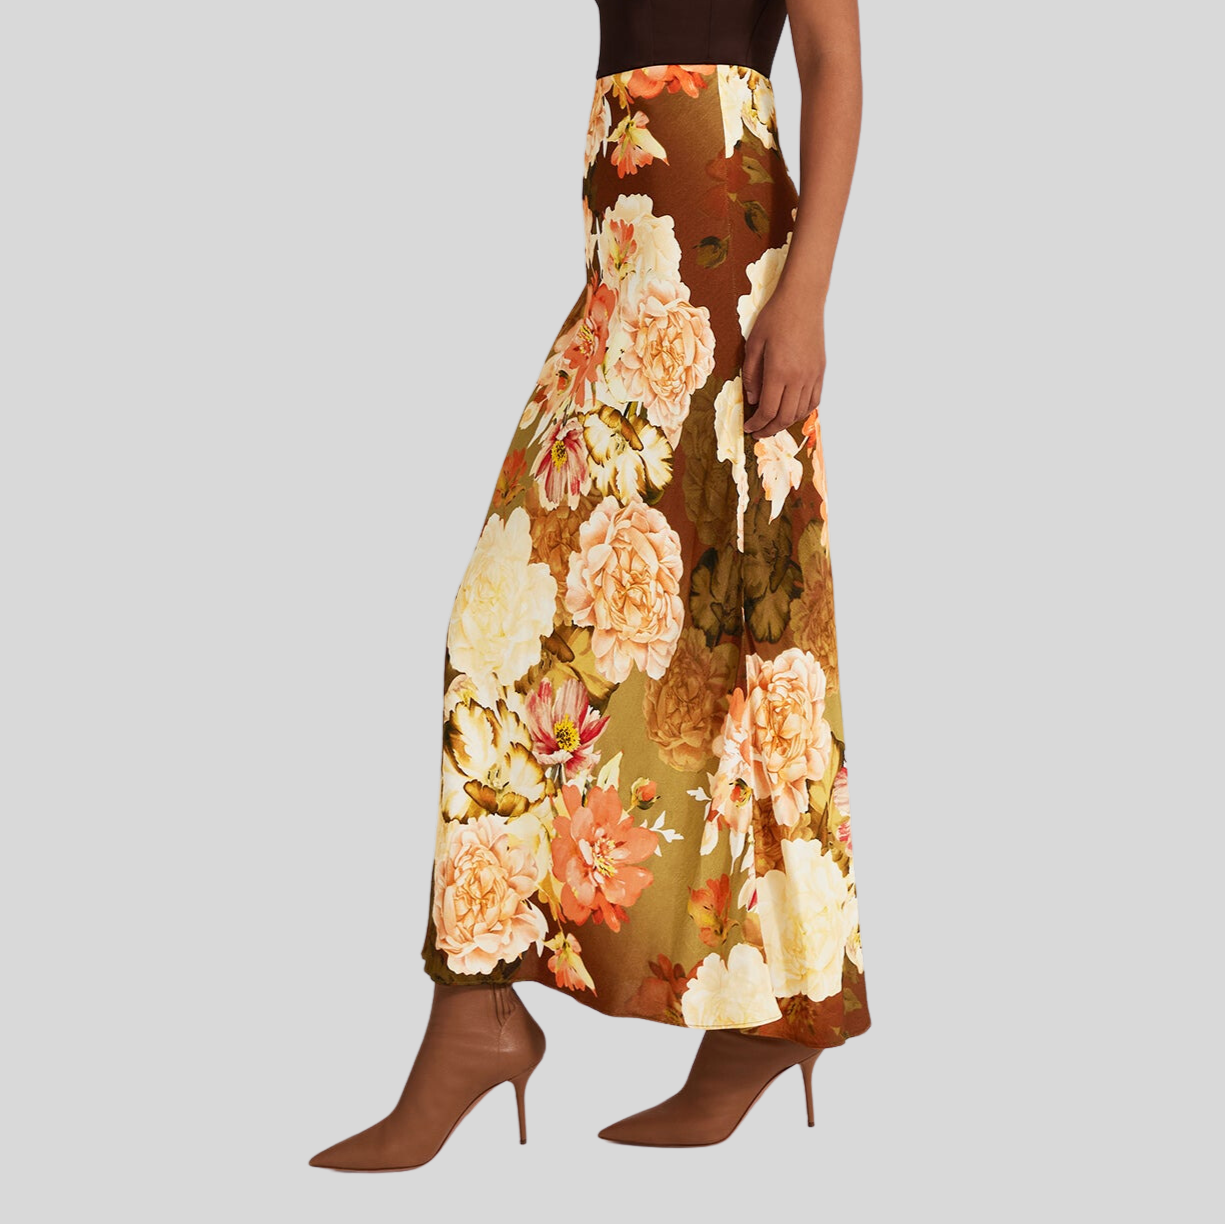 Gotstyle Fashion - Favorite Daughter Skirts Floral Print Bias Cut Crepe Midi Skirt - Multi